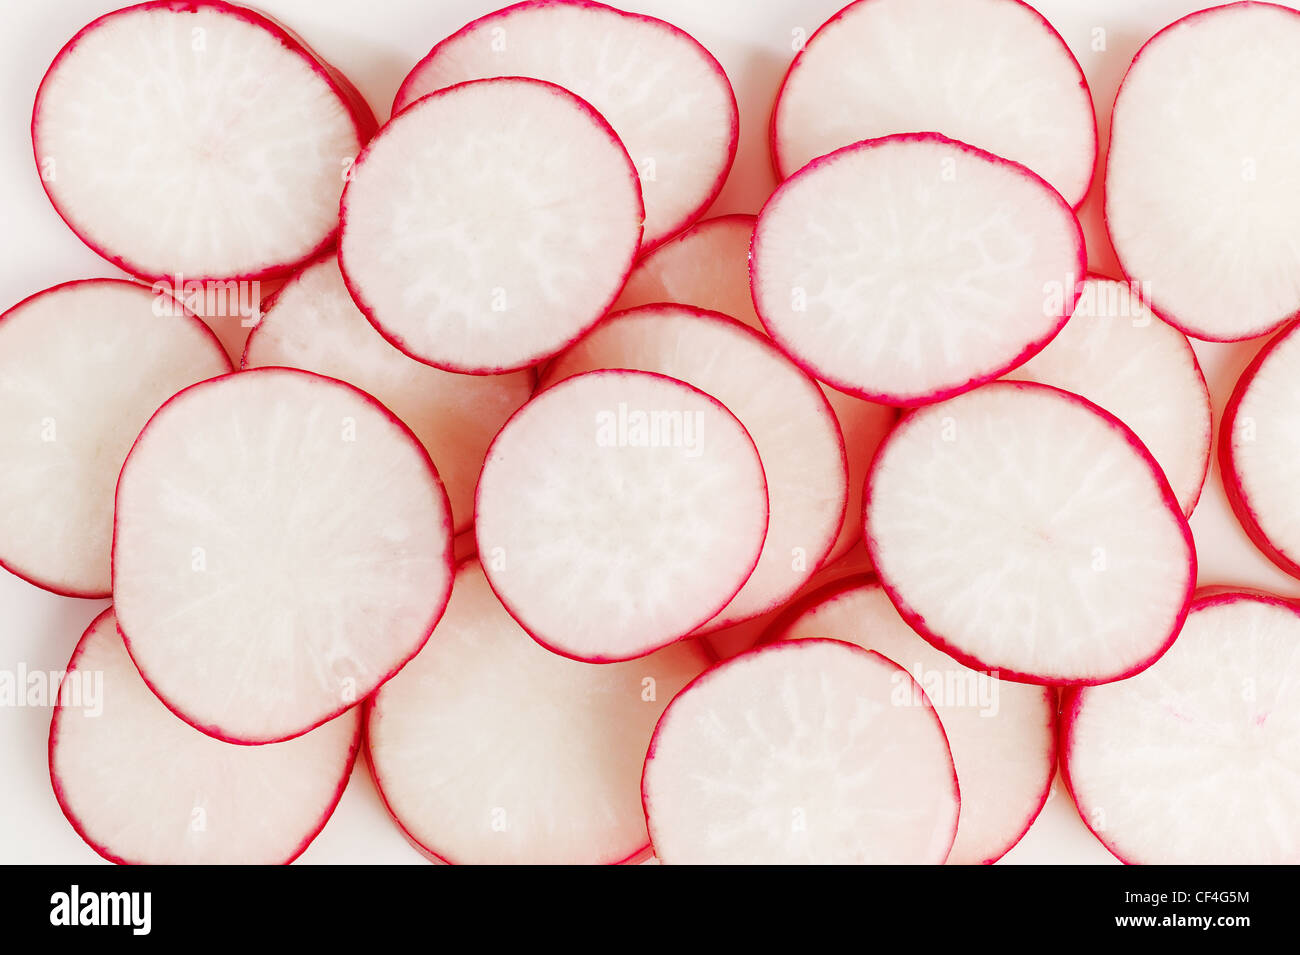 sliced red radish on white background Stock Photo